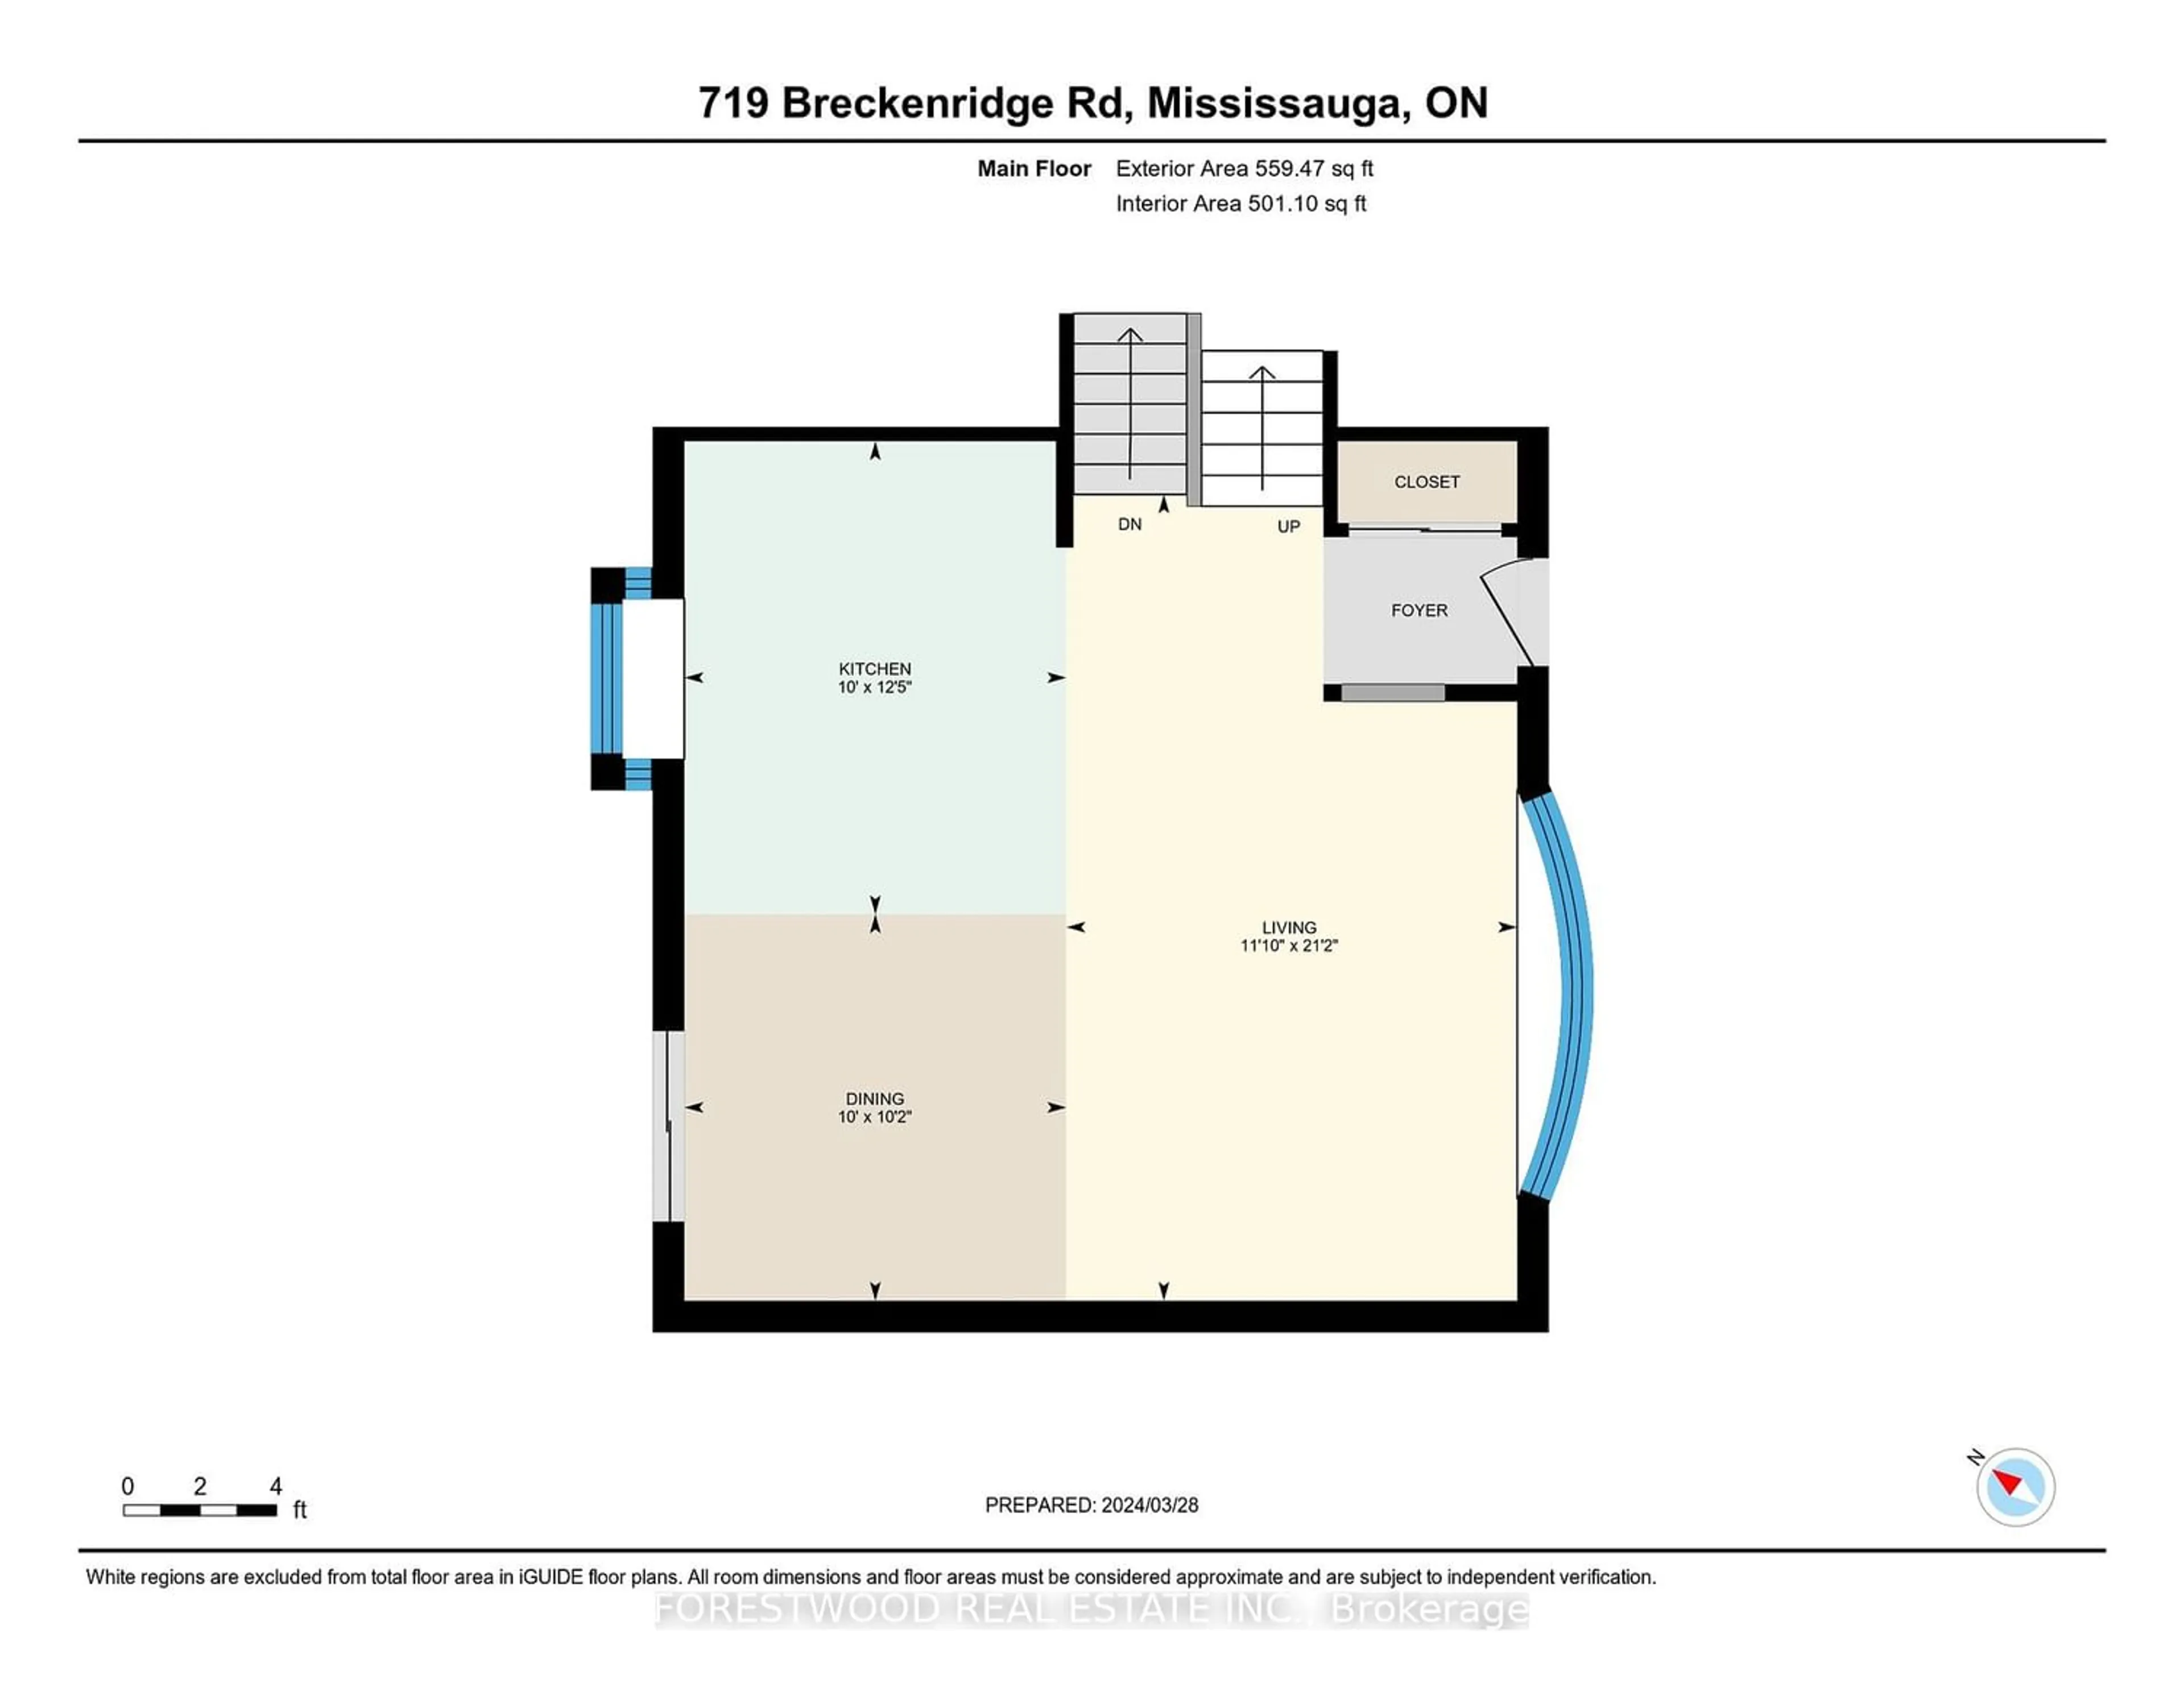 Floor plan for 719 Breckenridge Rd, Mississauga Ontario L4Y 2R2